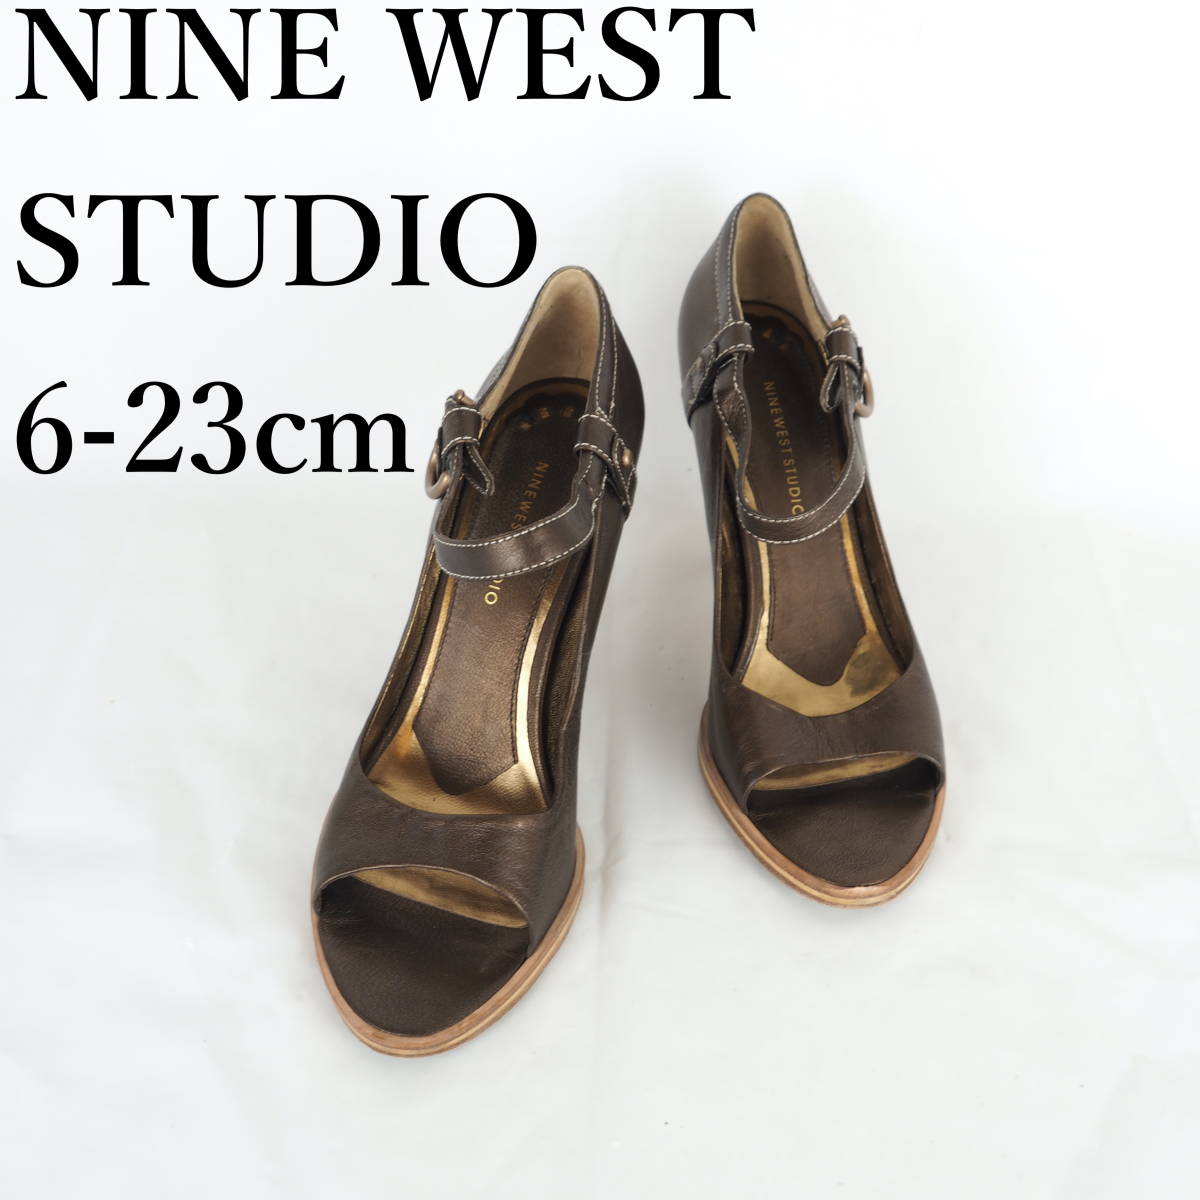 LK9385*NINE WEST STUDIO* Nine West * lady's pumps *6-23cm* tea 